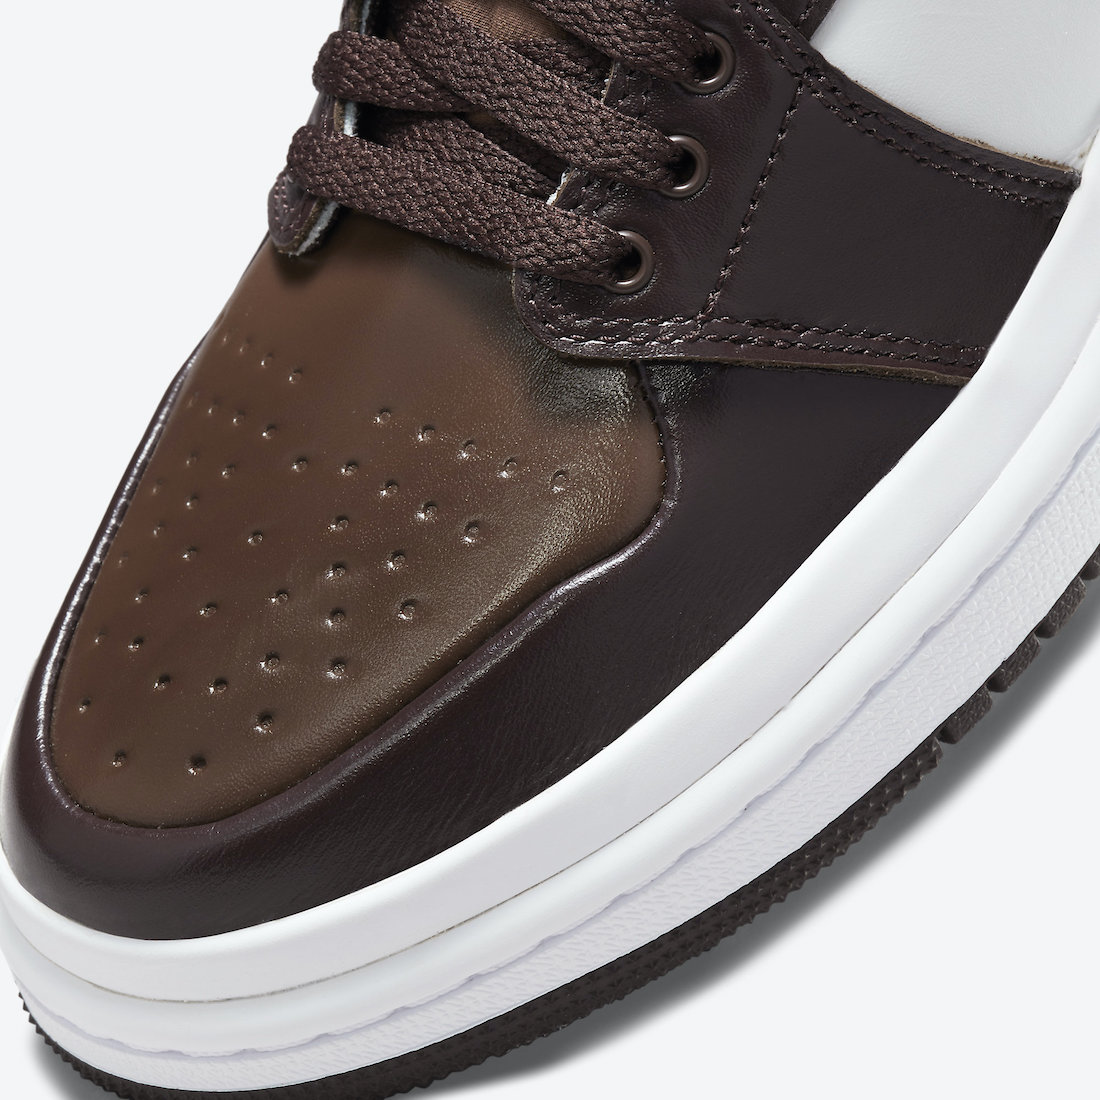 Air Jordan 1 Acclimate Brown Basalt Oatmeal Chocolate Black DC7723-200 Release Date Info